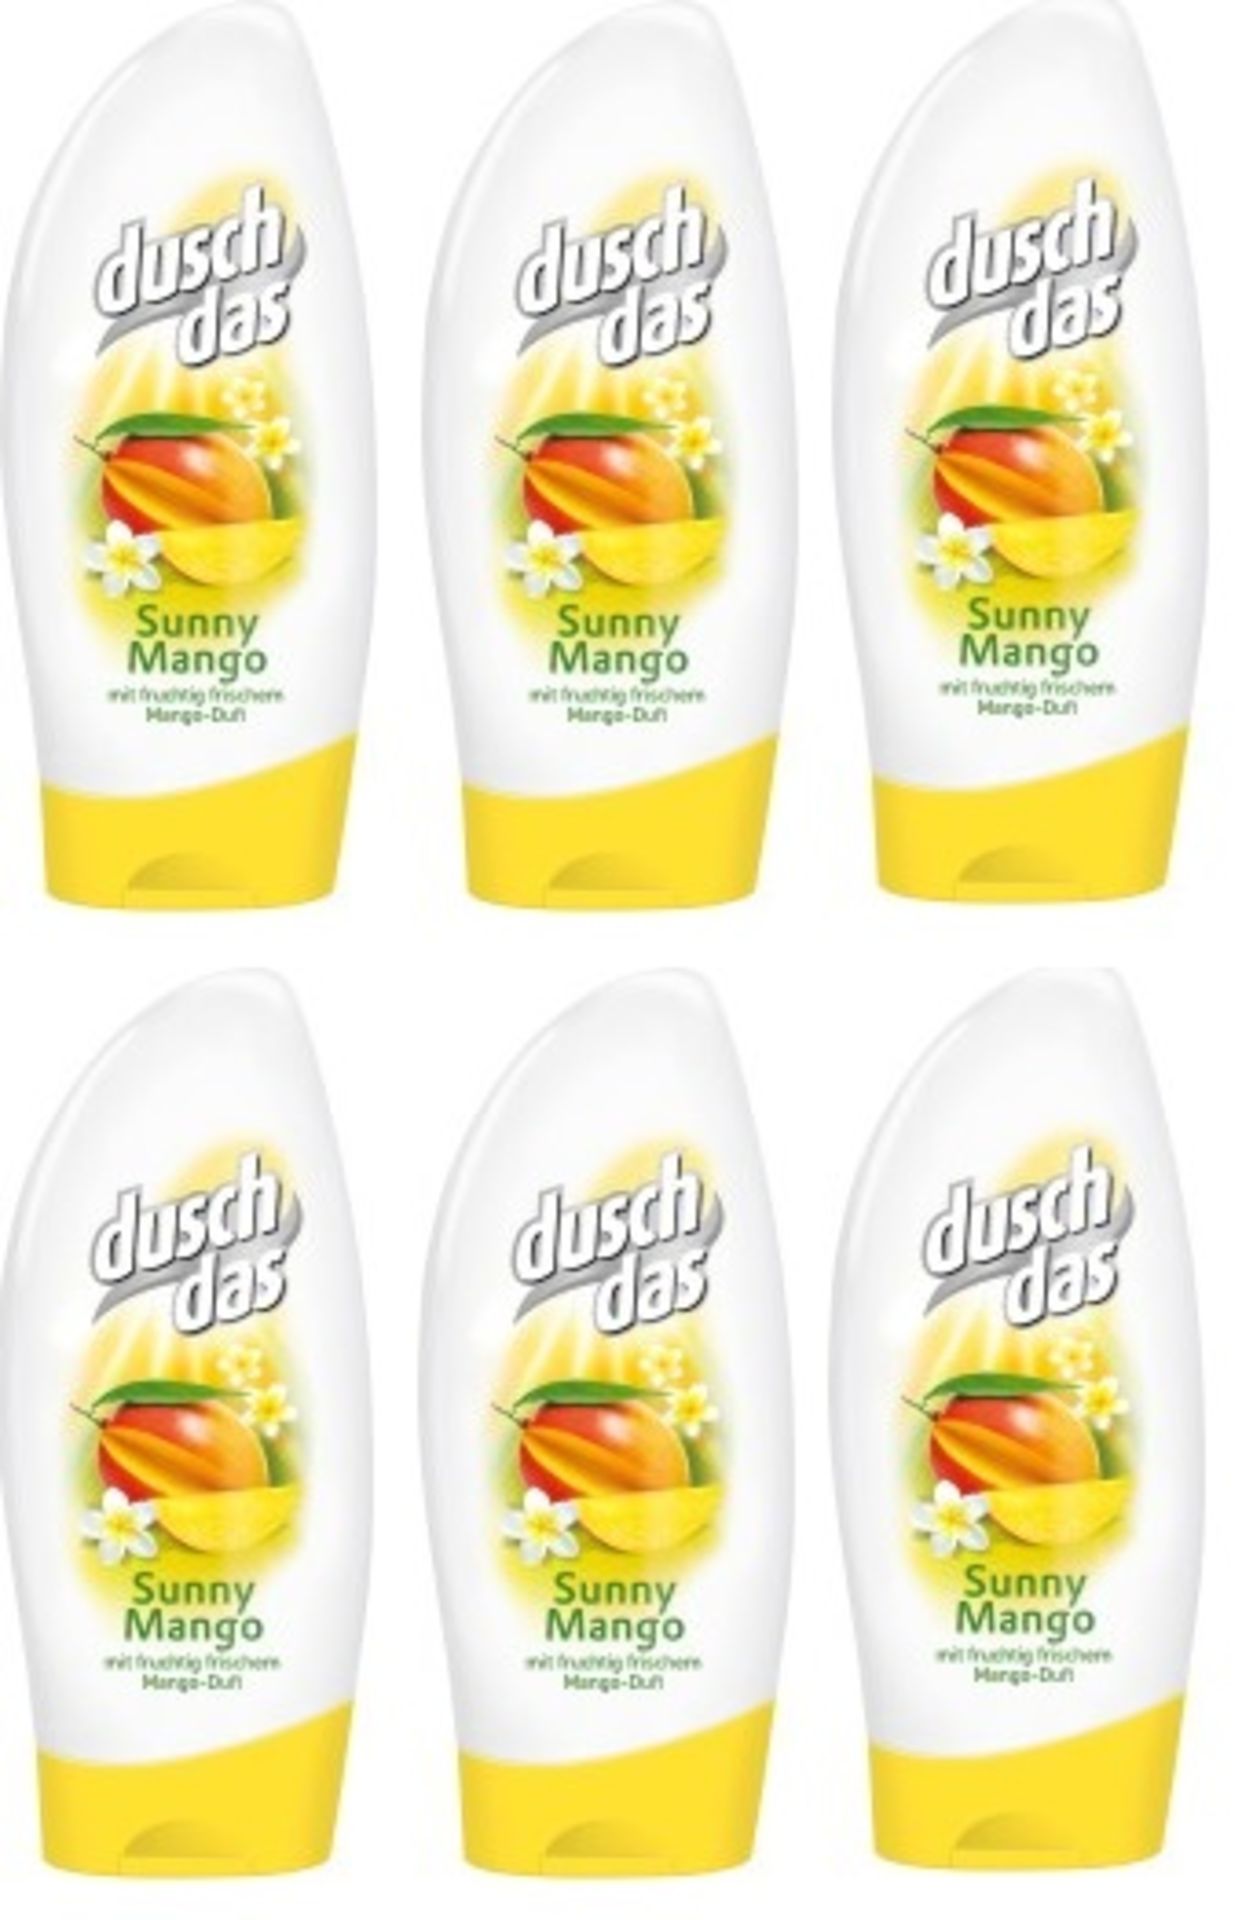 + VAT Brand New Lot Of 6 Dusch Das Sunny Mango Shower Gel 250 ml Total eBay Price £20.46 (Note